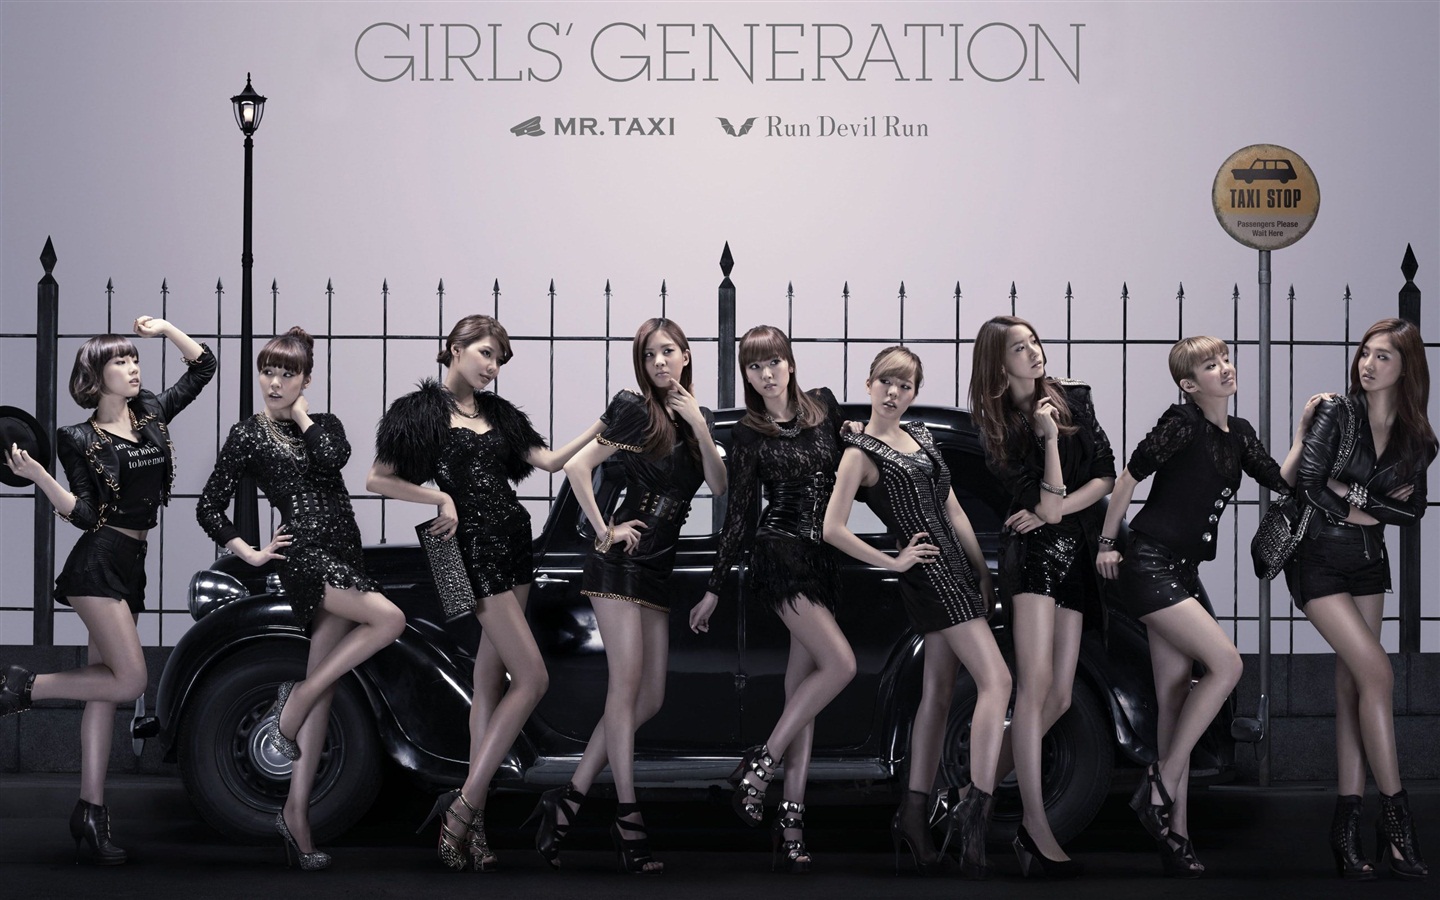 Generation Girls HD wallpapers dernière collection #14 - 1440x900